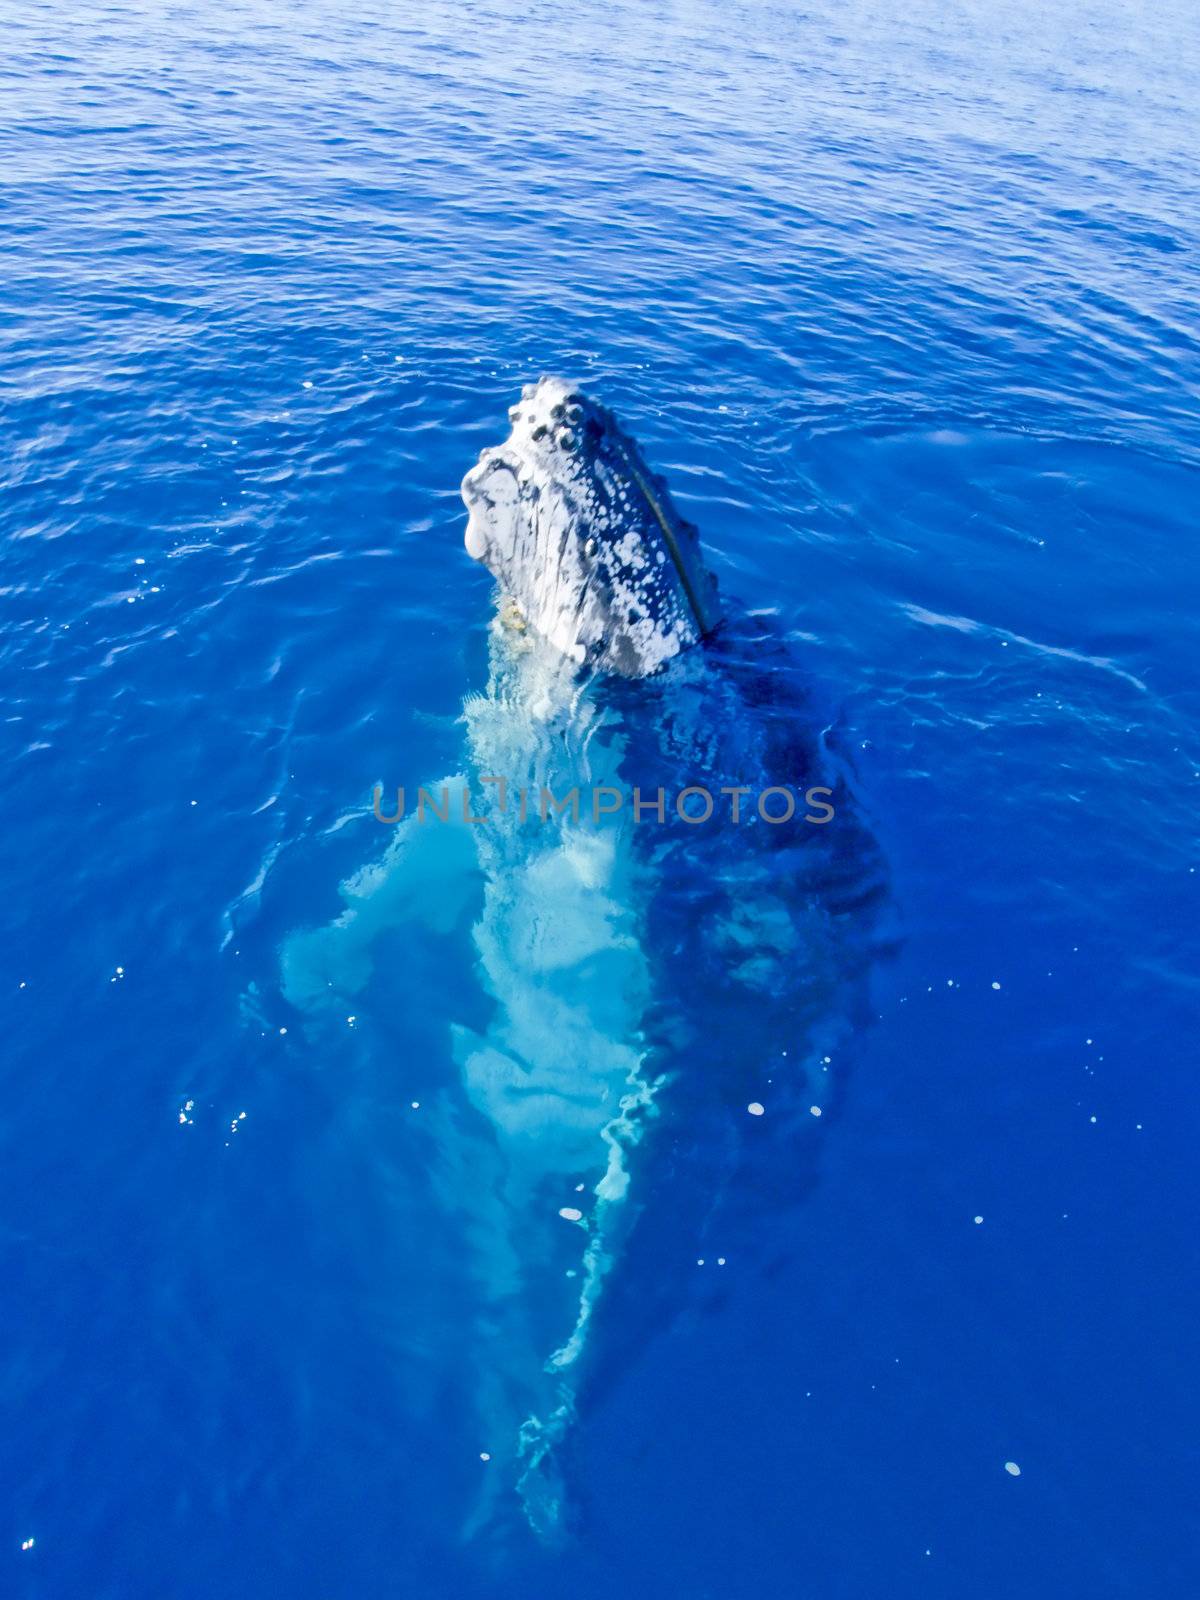 Marine Mammal - Humpback whale in the deep blue ocean